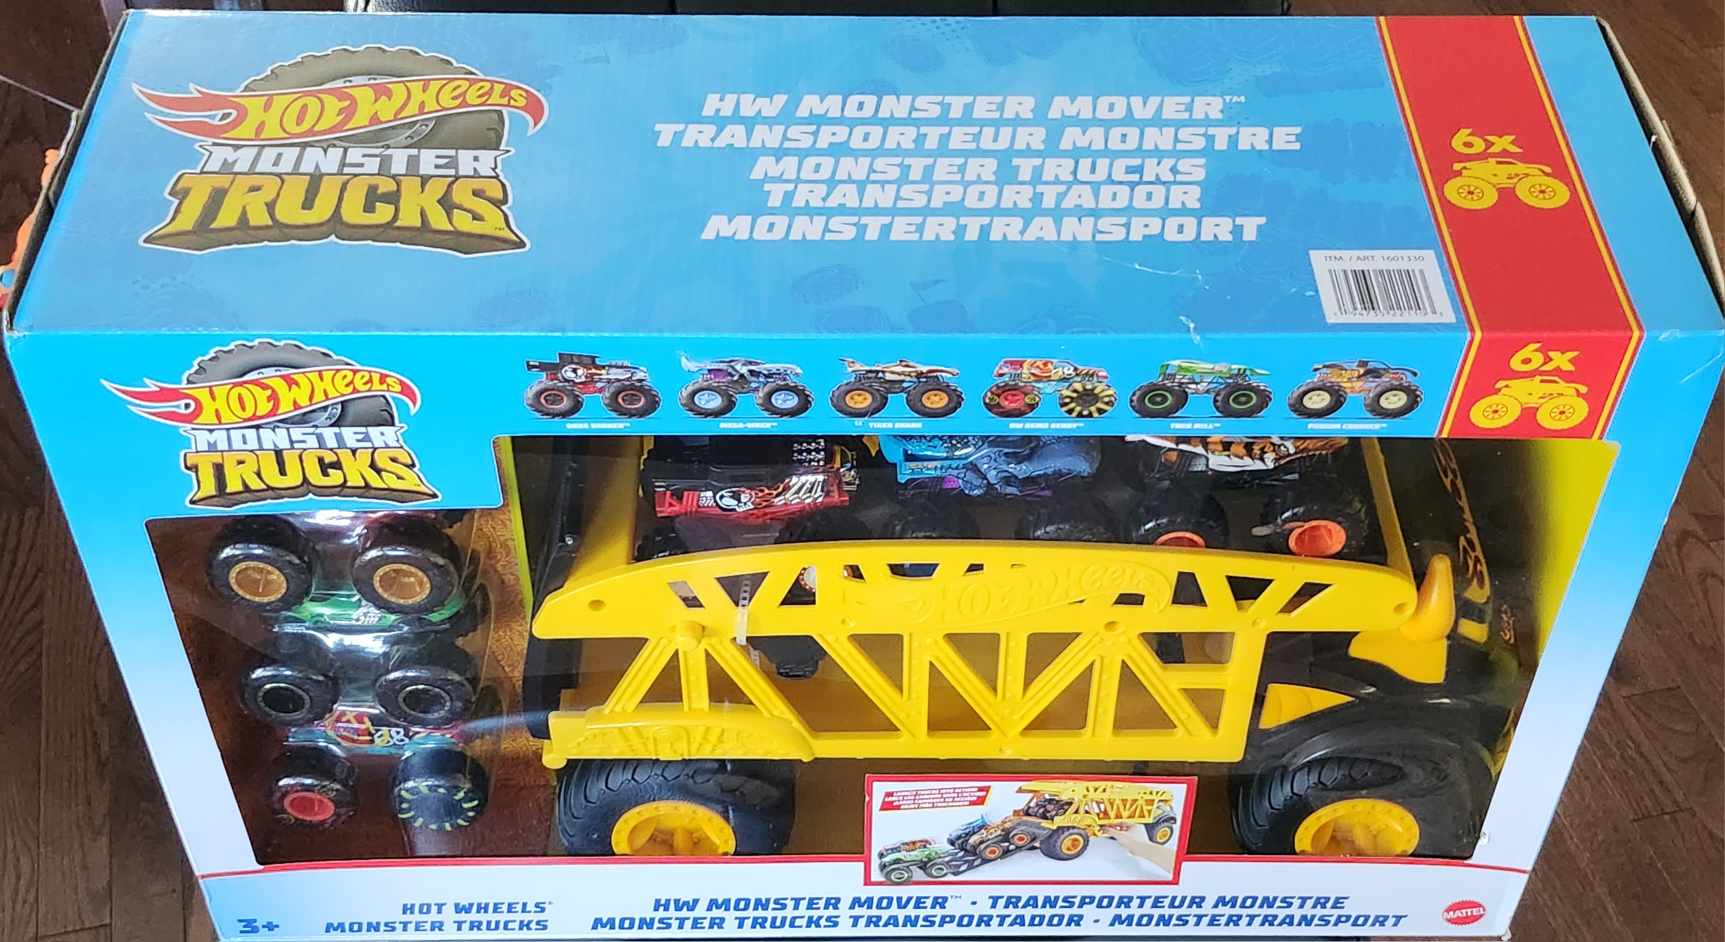 Hot Wheels Monster Truck Monster Mover Bundle